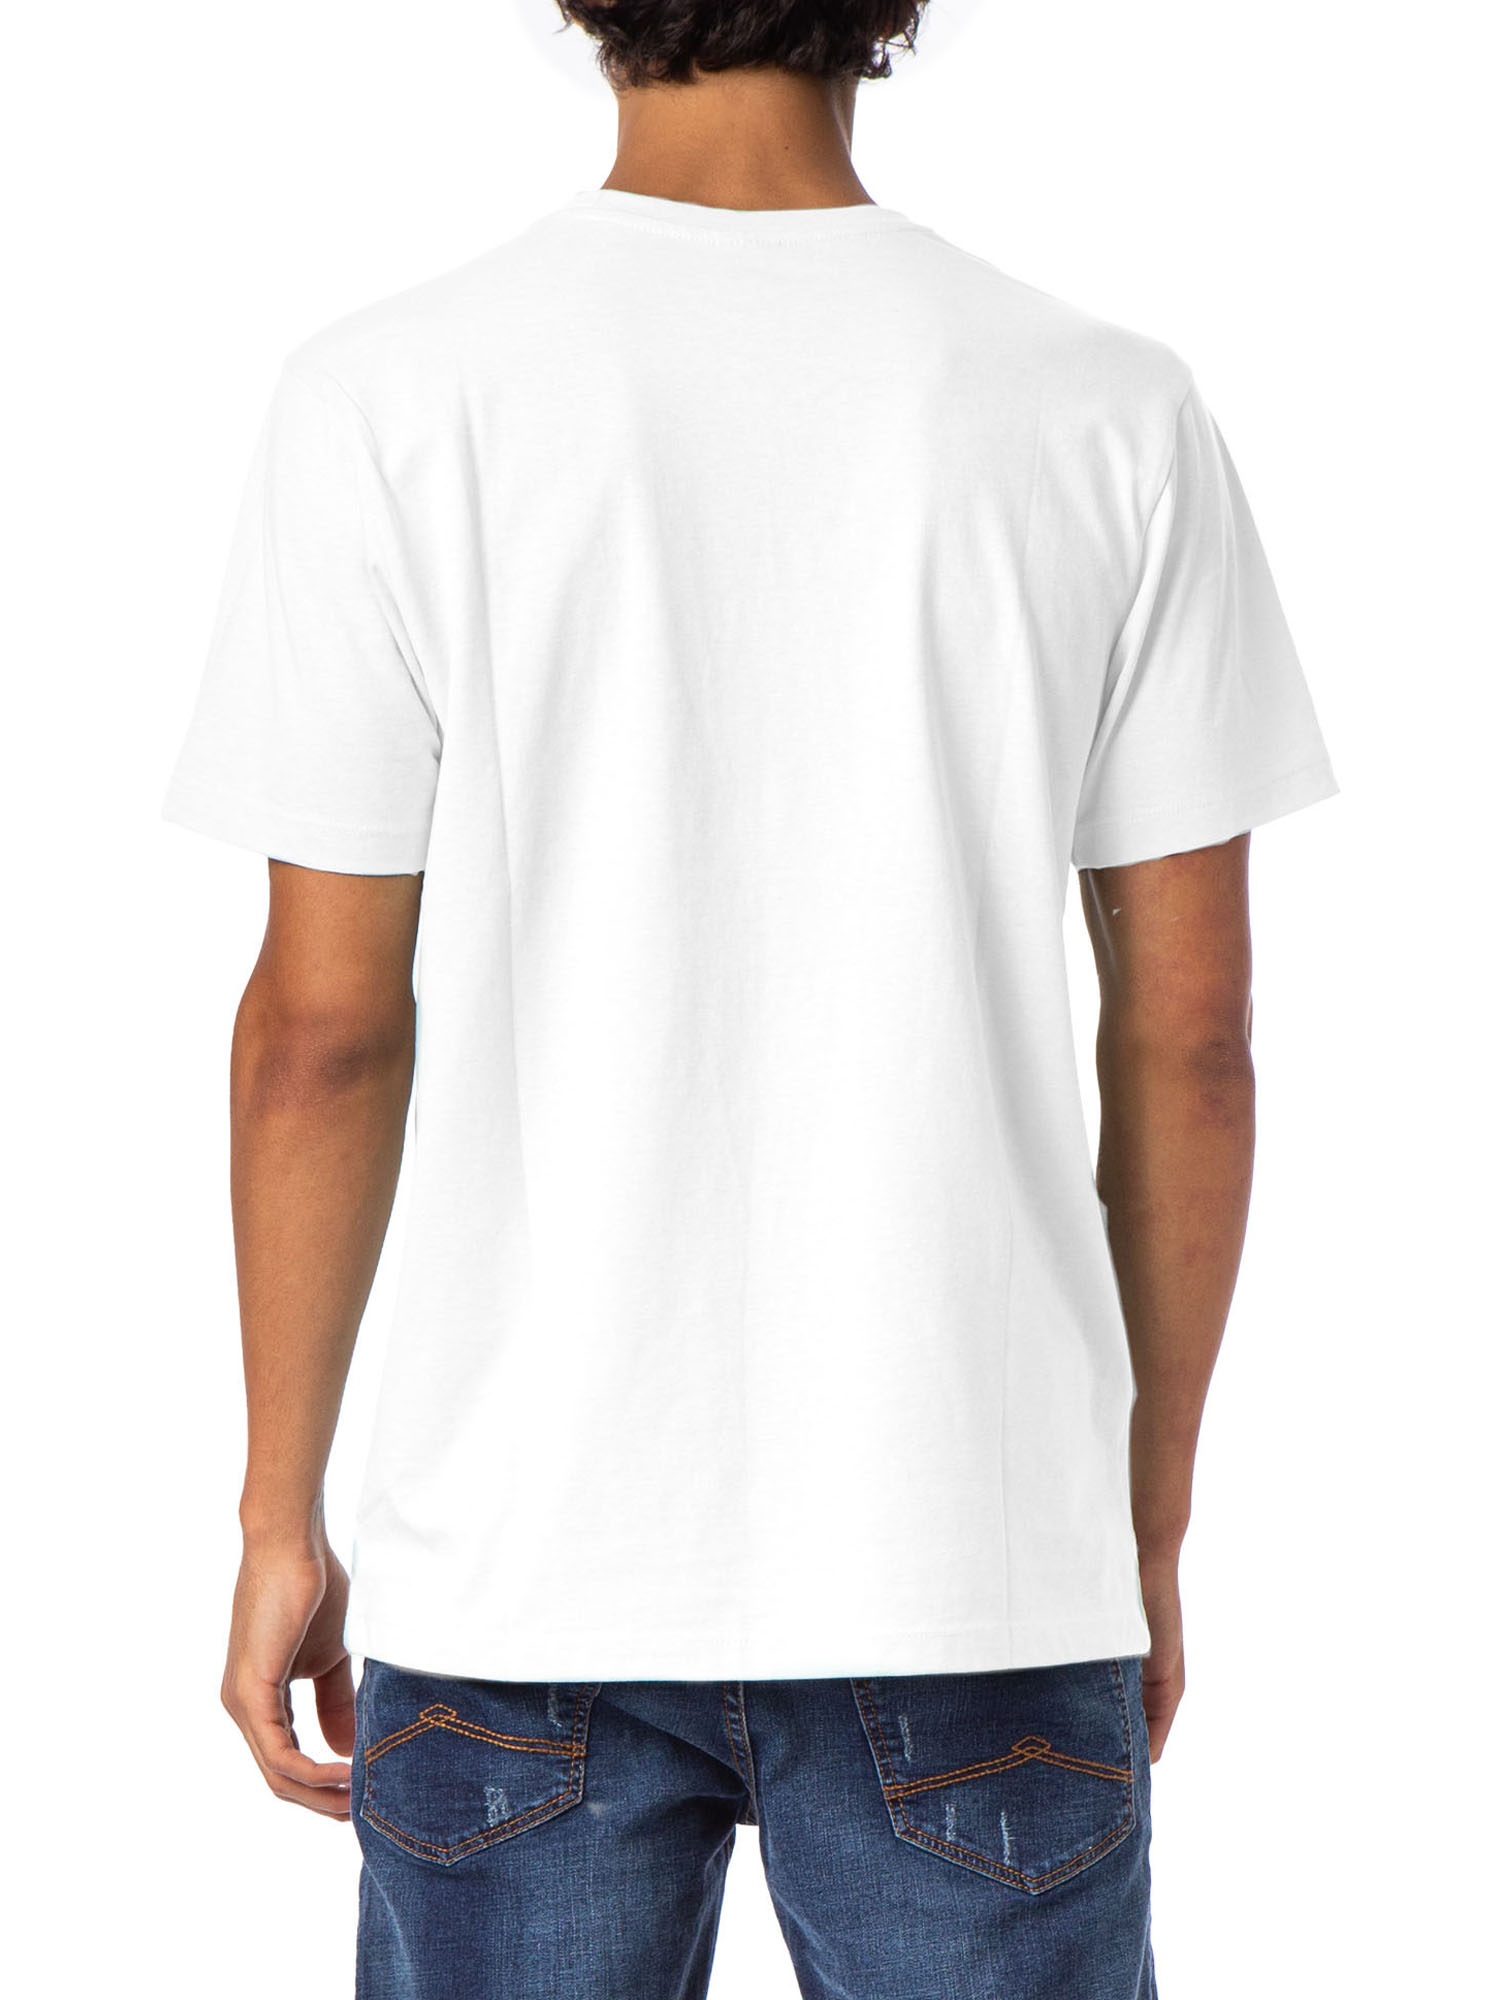 U.S. Polo Assn. Men's Pocket Knit T-Shirt - image 2 of 2